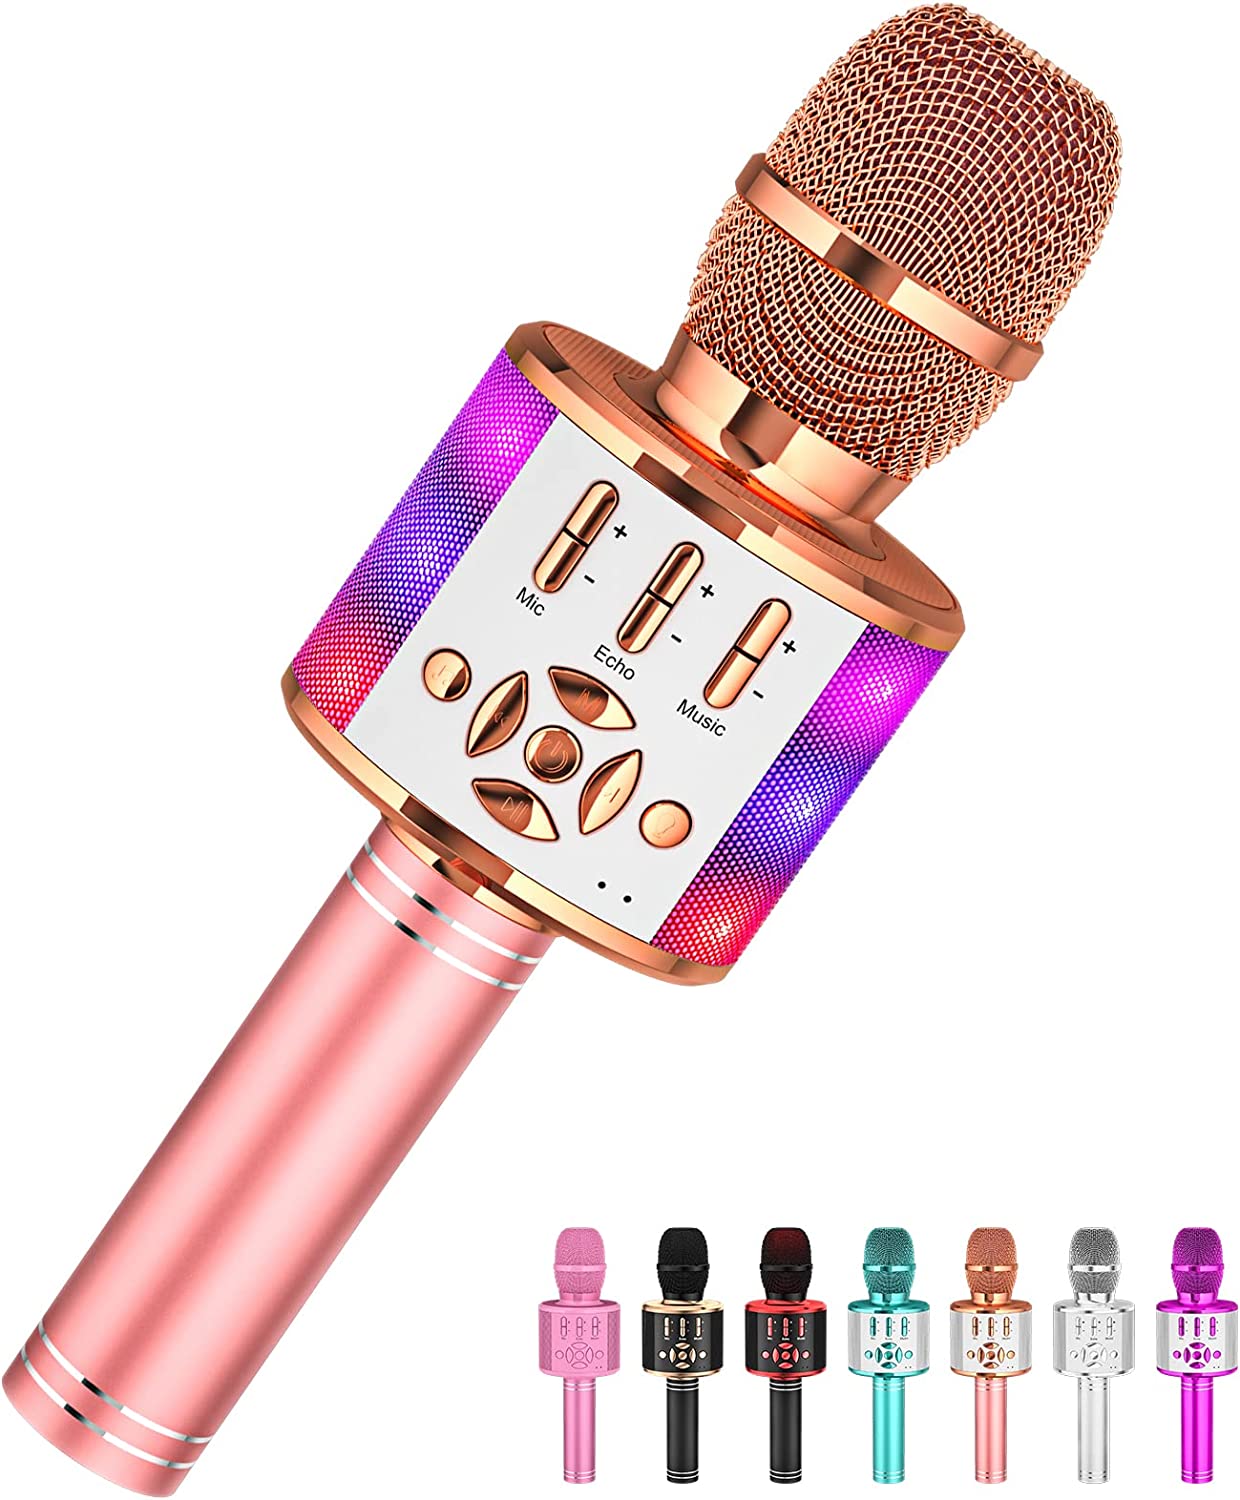 Small, inexpensive thing: karaoke microphone